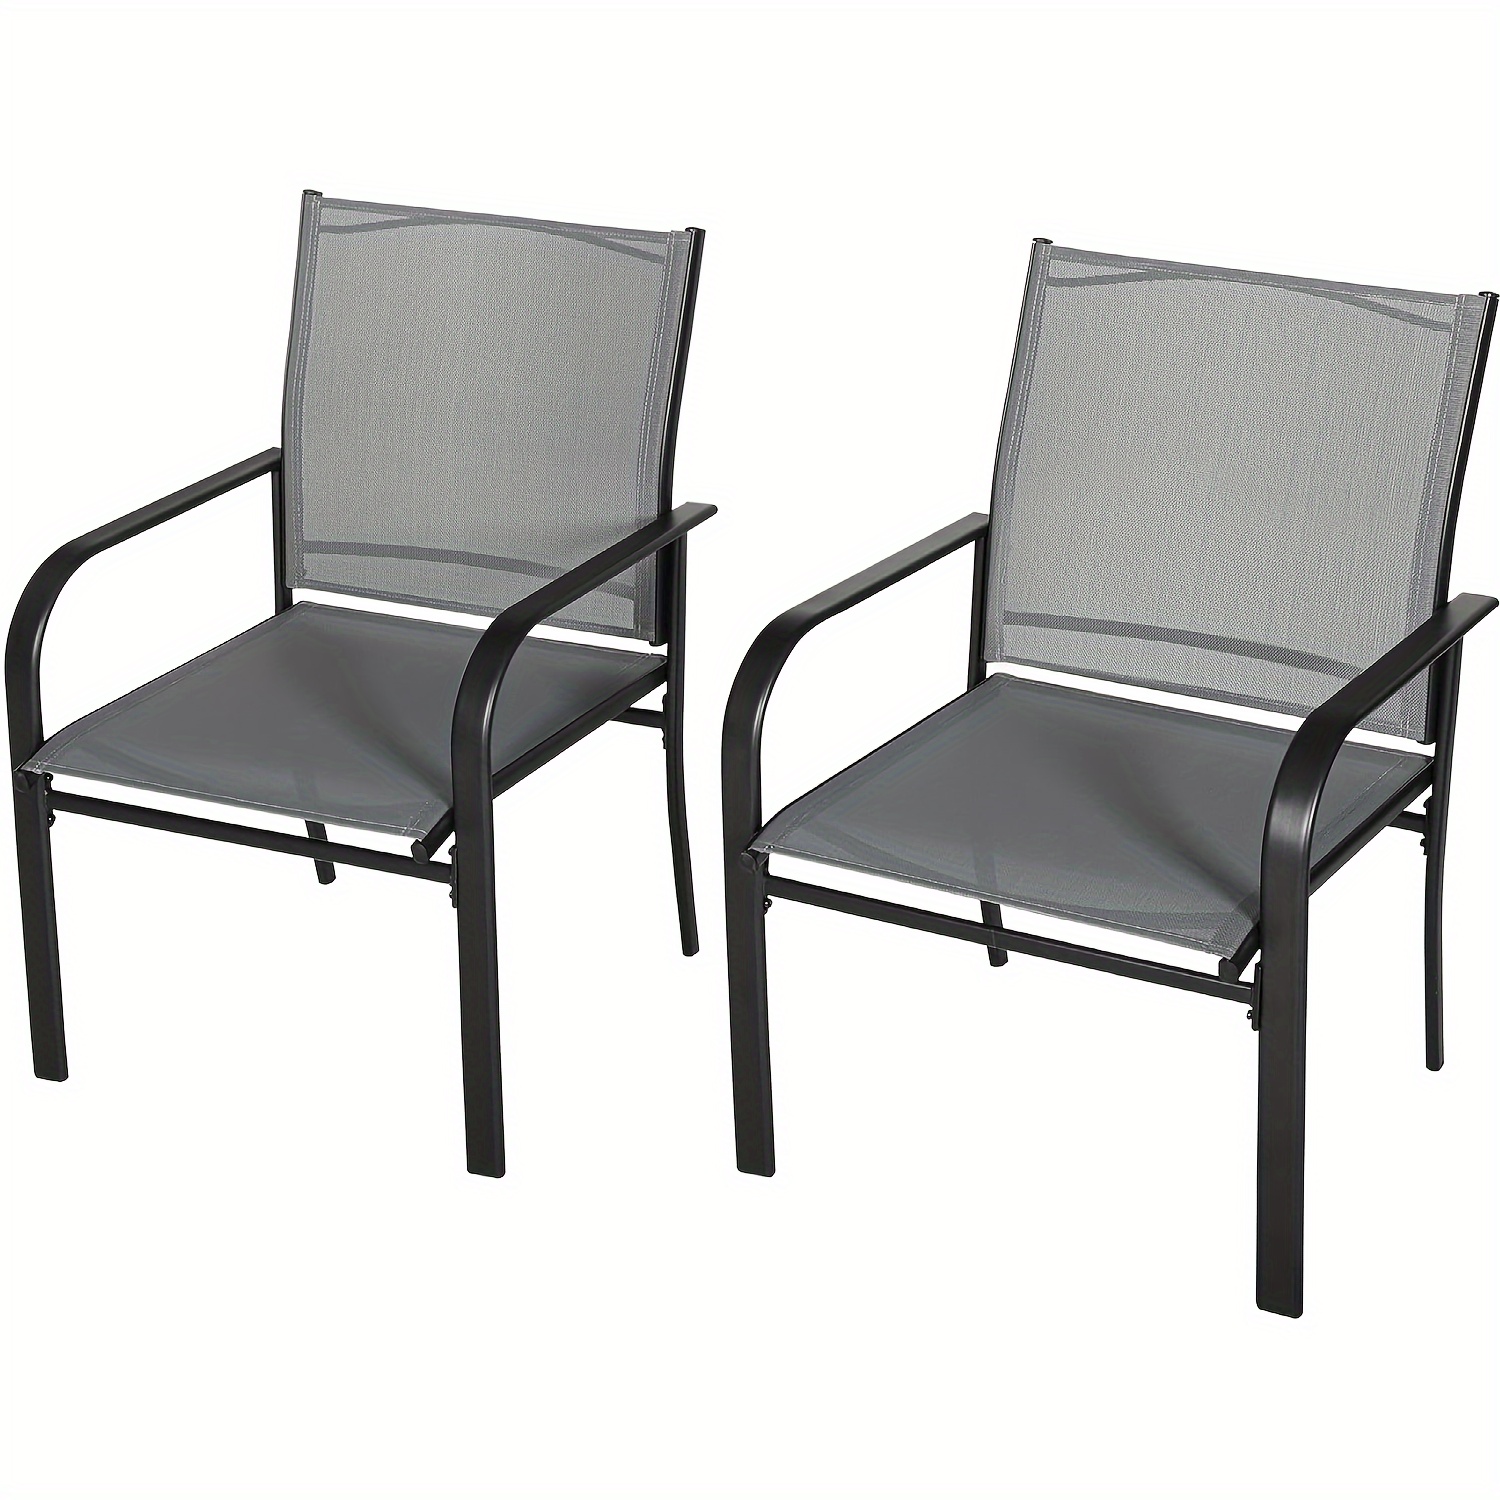 

2pcs Patio Chairs Outdoor Textilene Dining Chair For Garden, Backyard, Deck, Lawn, Gray